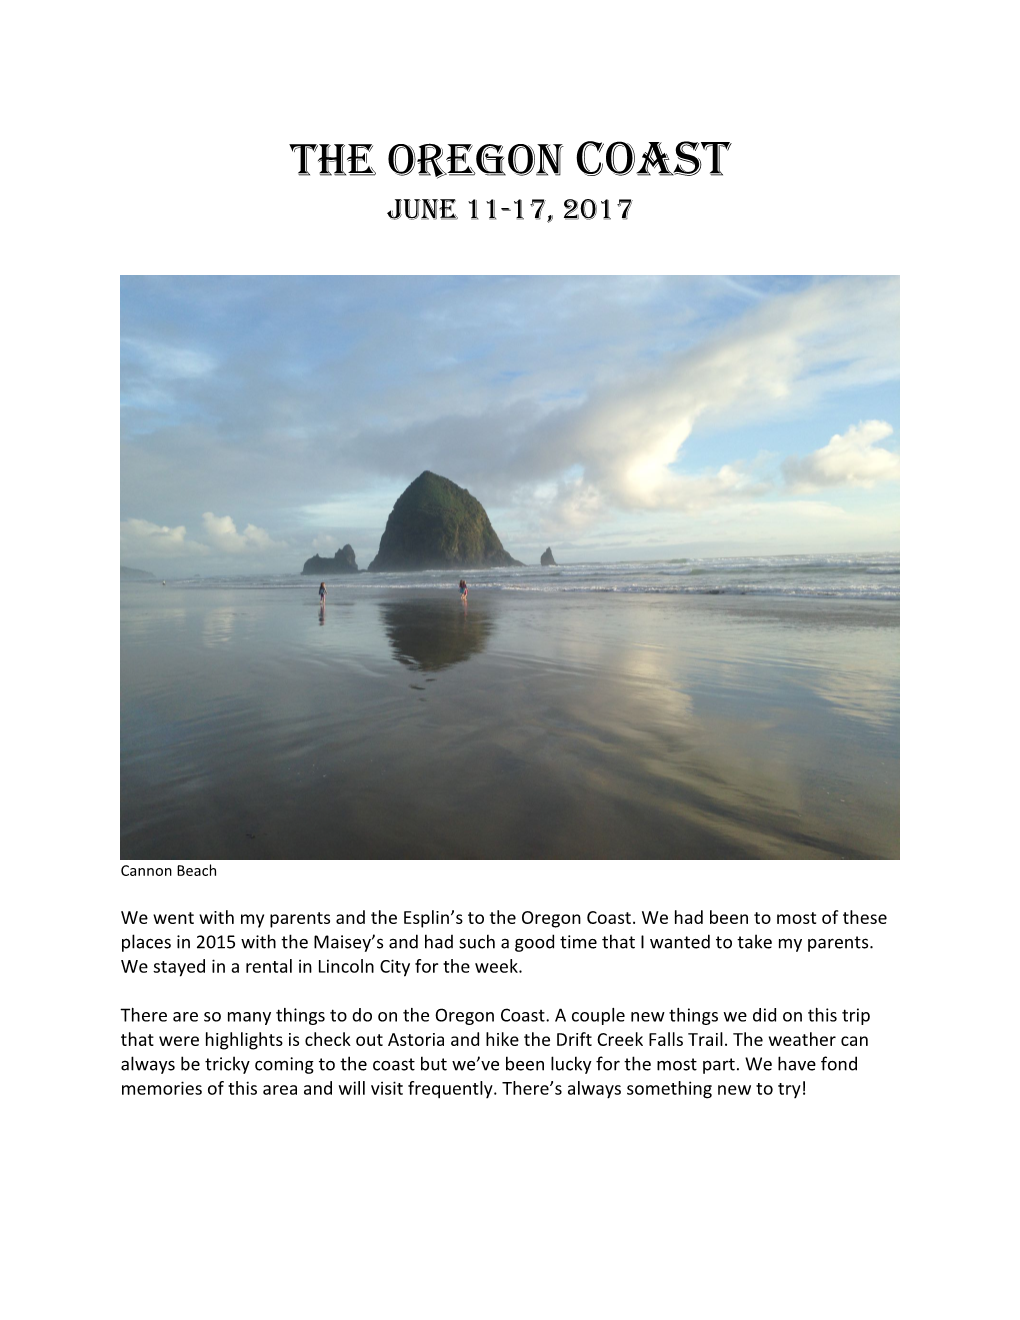 The Oregon Coast June 11-17, 2017